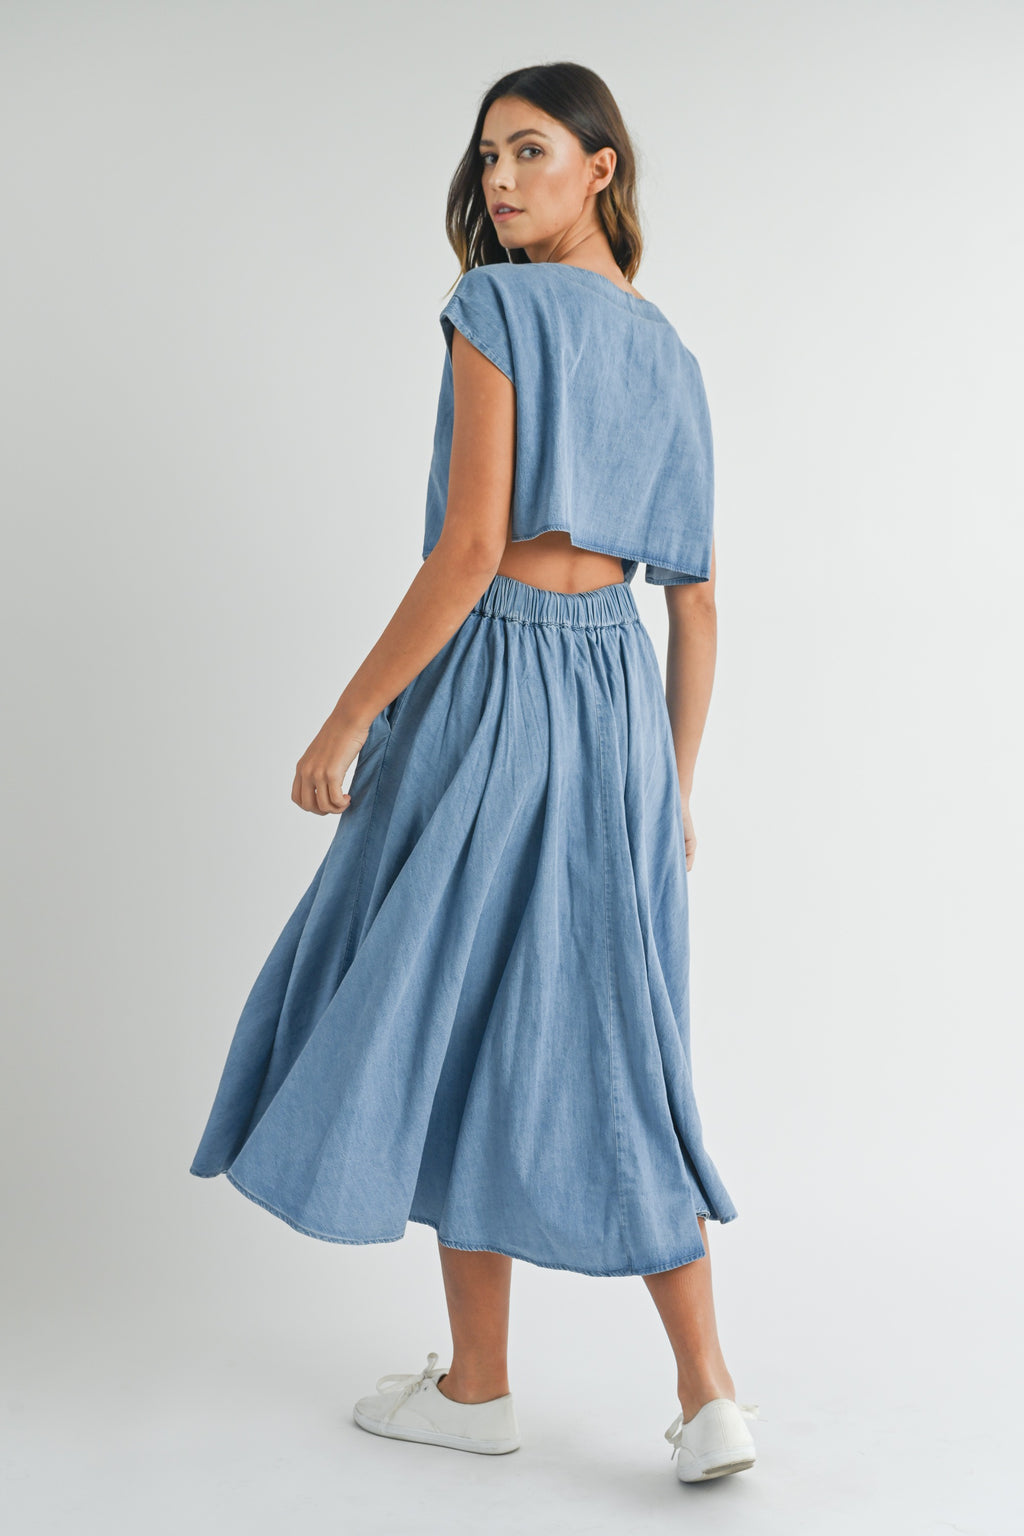 Blue Highway Denim Crop Top and Midi Skirt